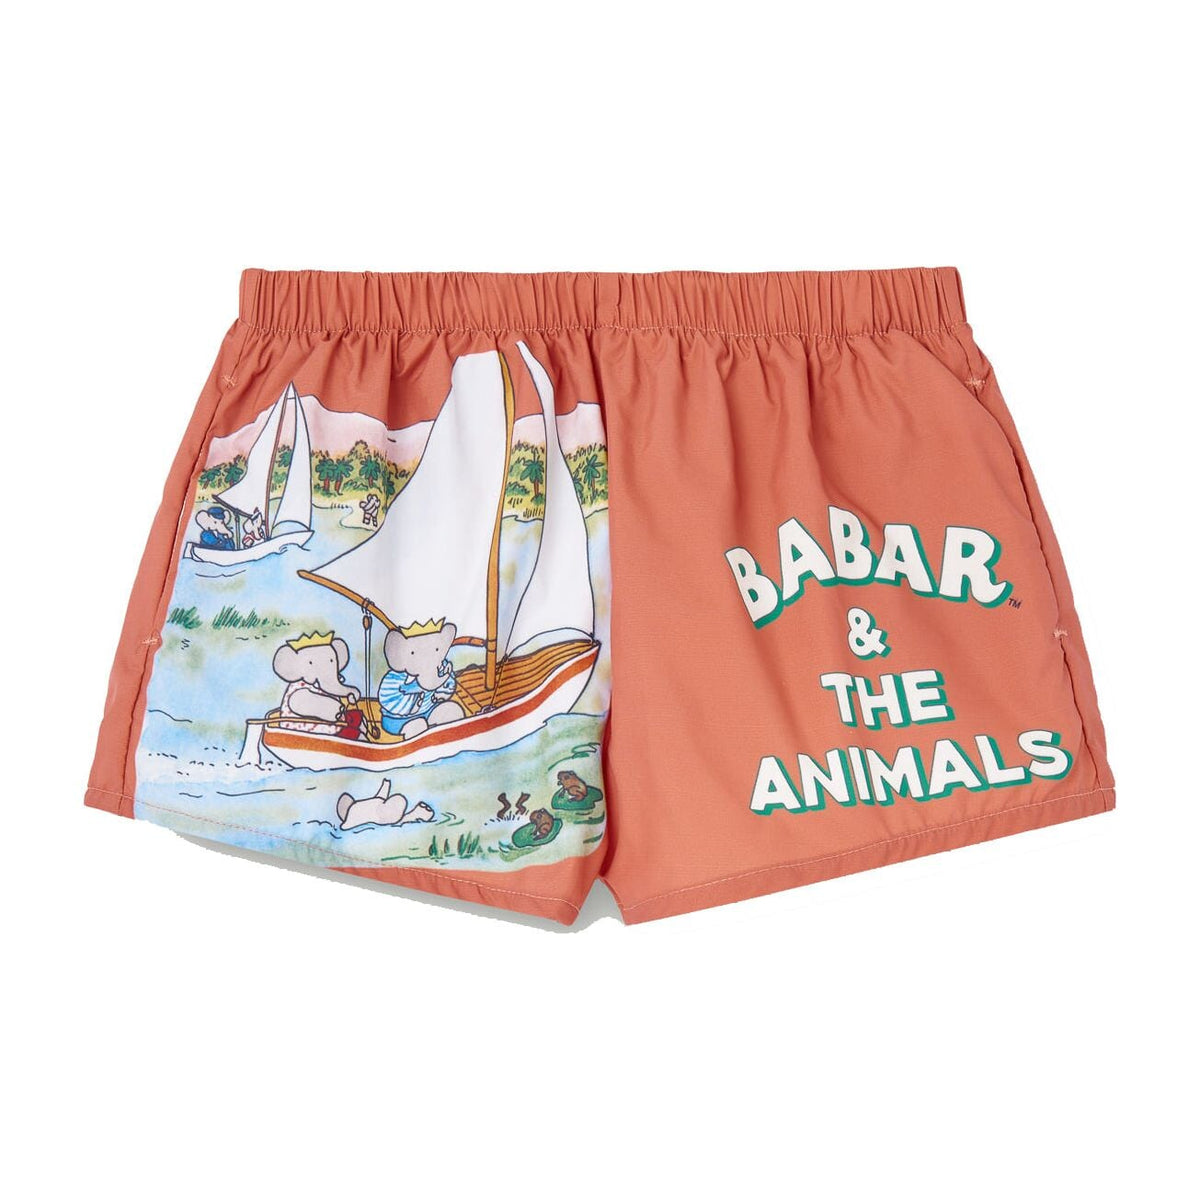 Babar Puppy Kids Swimsuit - Elephant Boat